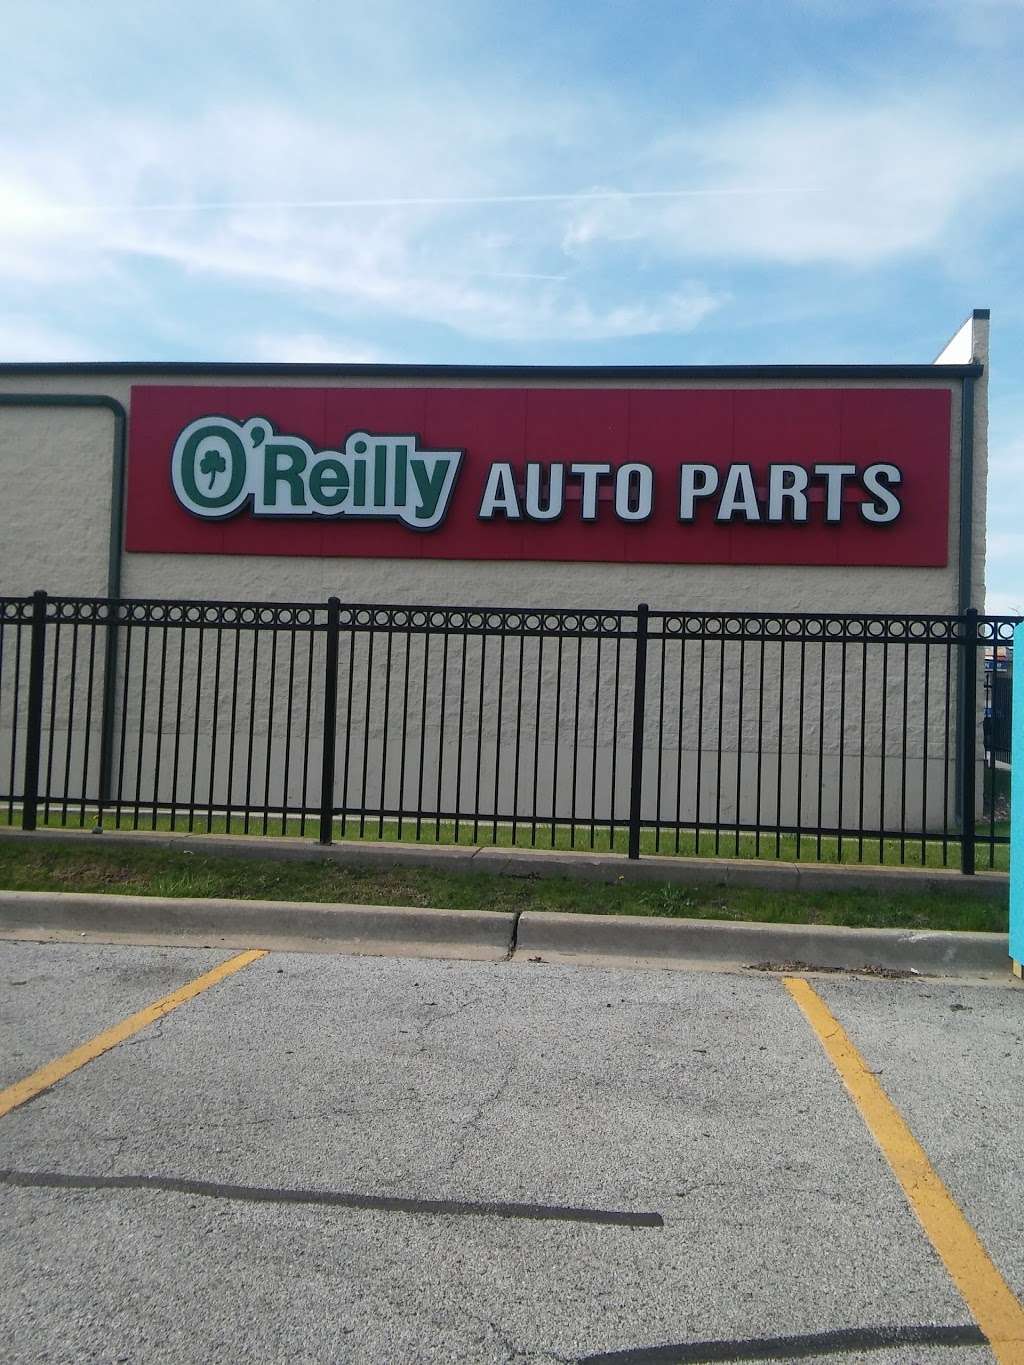 OReilly Auto Parts | 4000 E 106th St, Chicago, IL 60617 | Phone: (773) 721-6702